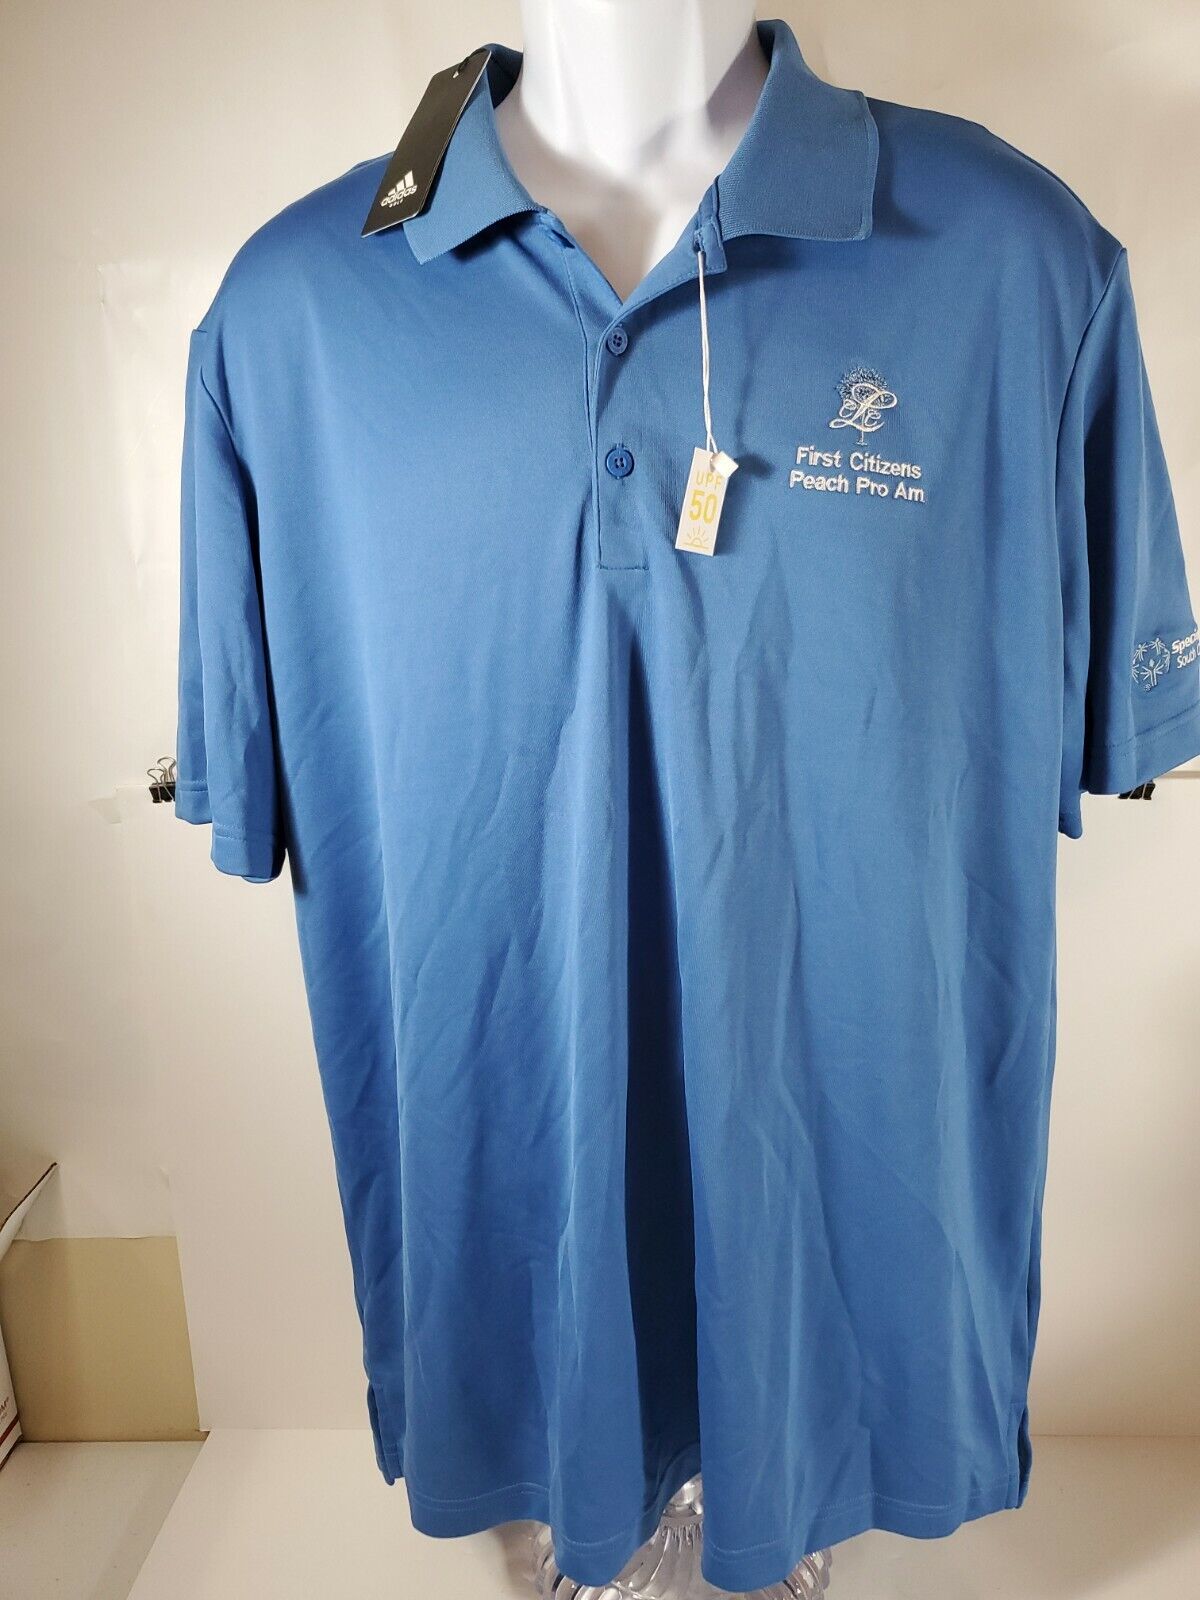 Adidas Golf Shirt NWT Sz XL Blue Short Sleeve Special Olympics South Carolina 